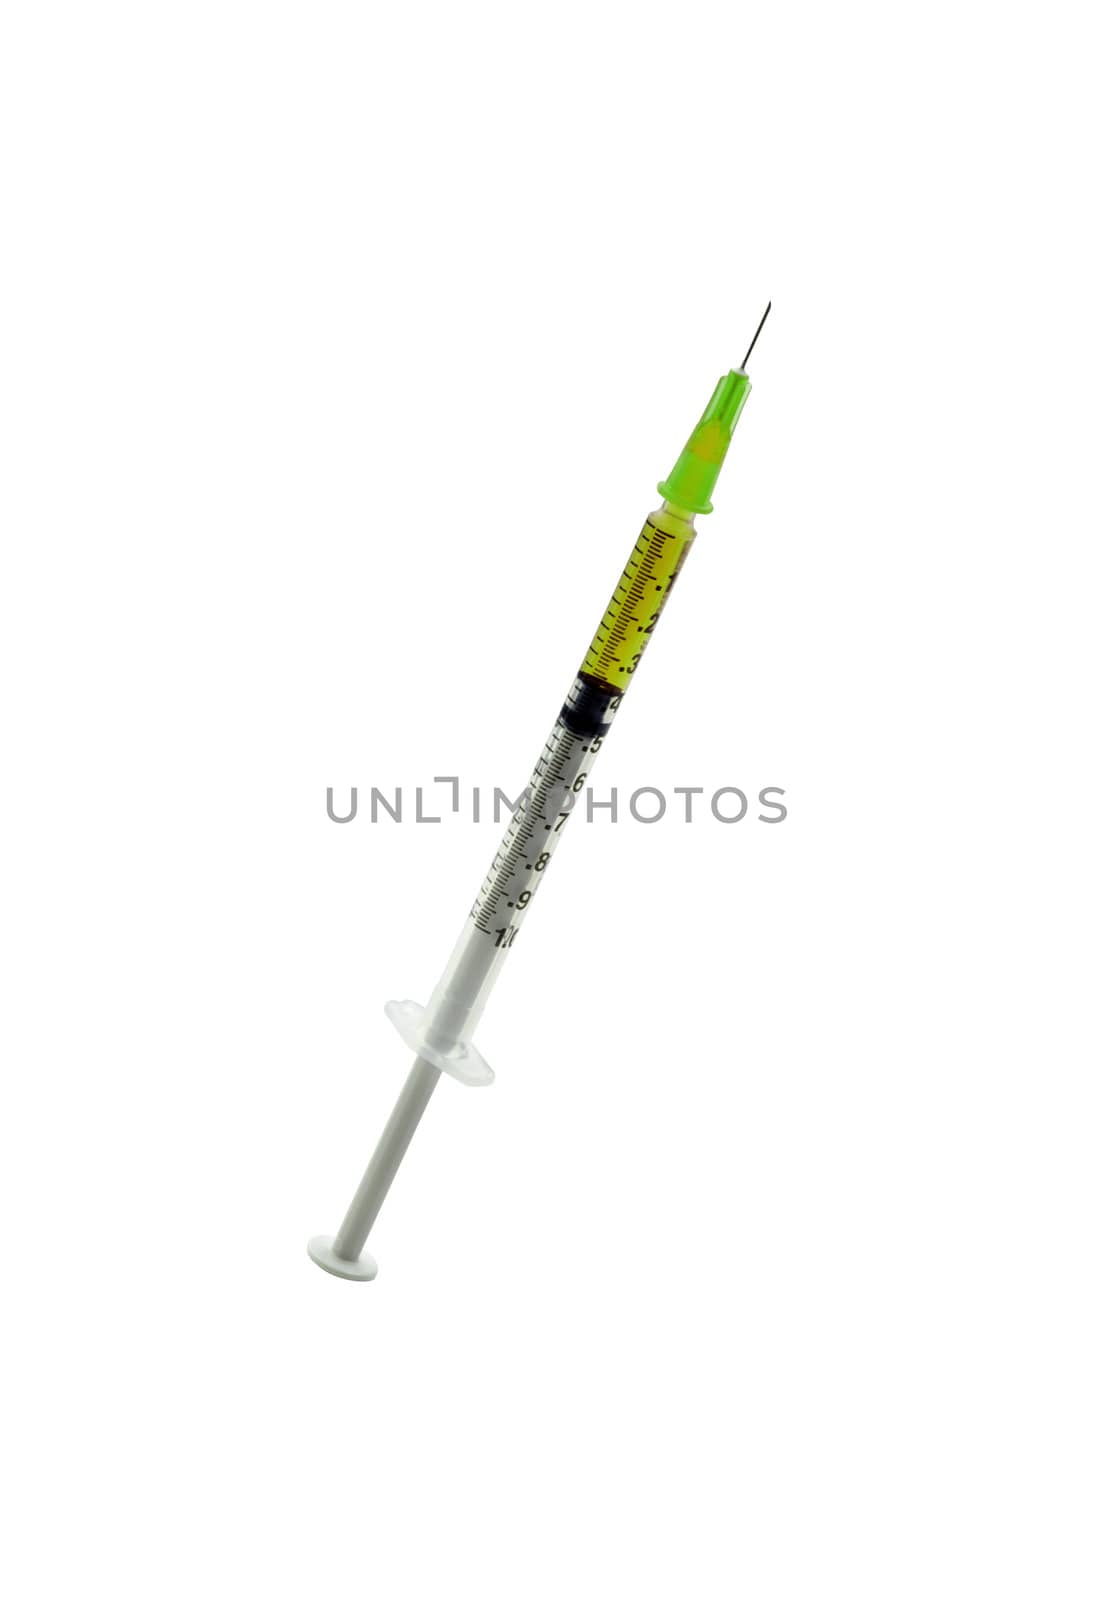 Glass syringe isolated on a white background